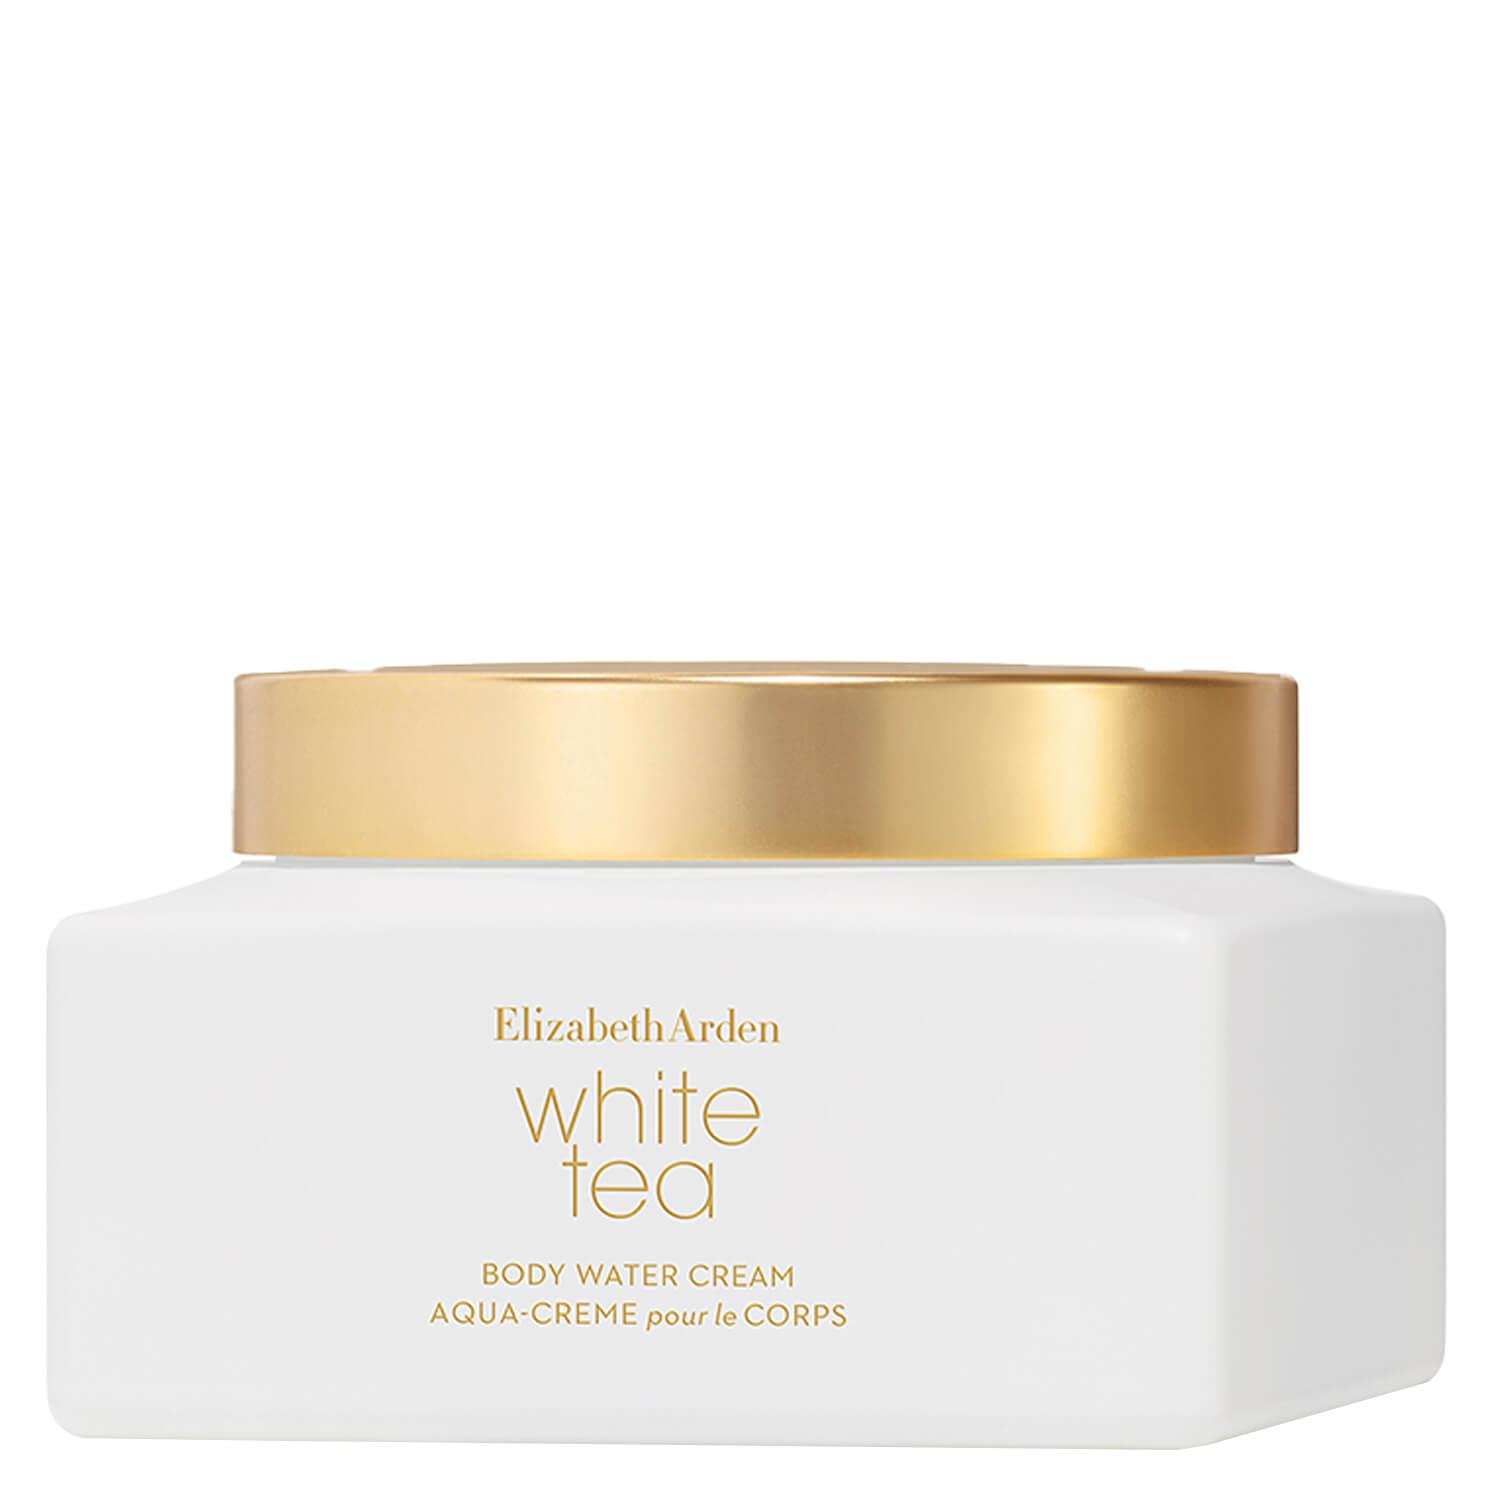 Elizabeth Arden - White Tea Body Water Cream